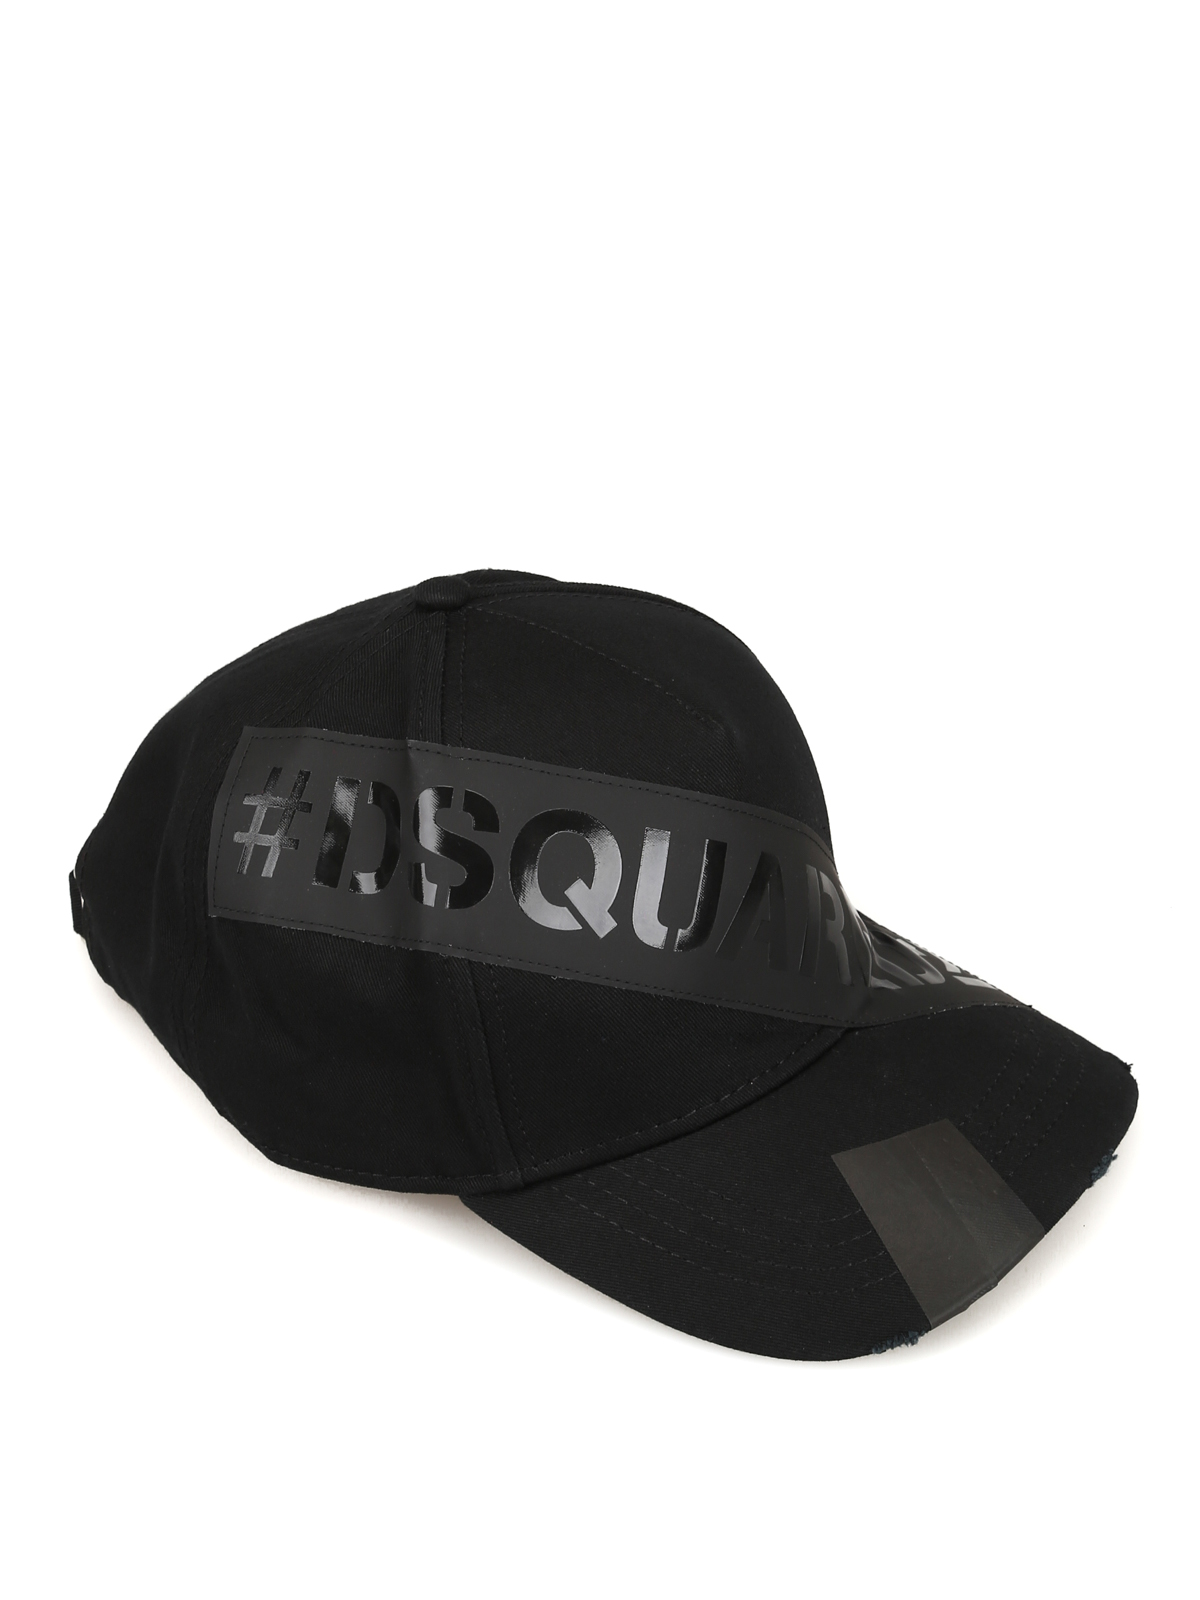 dsquared2 hat black